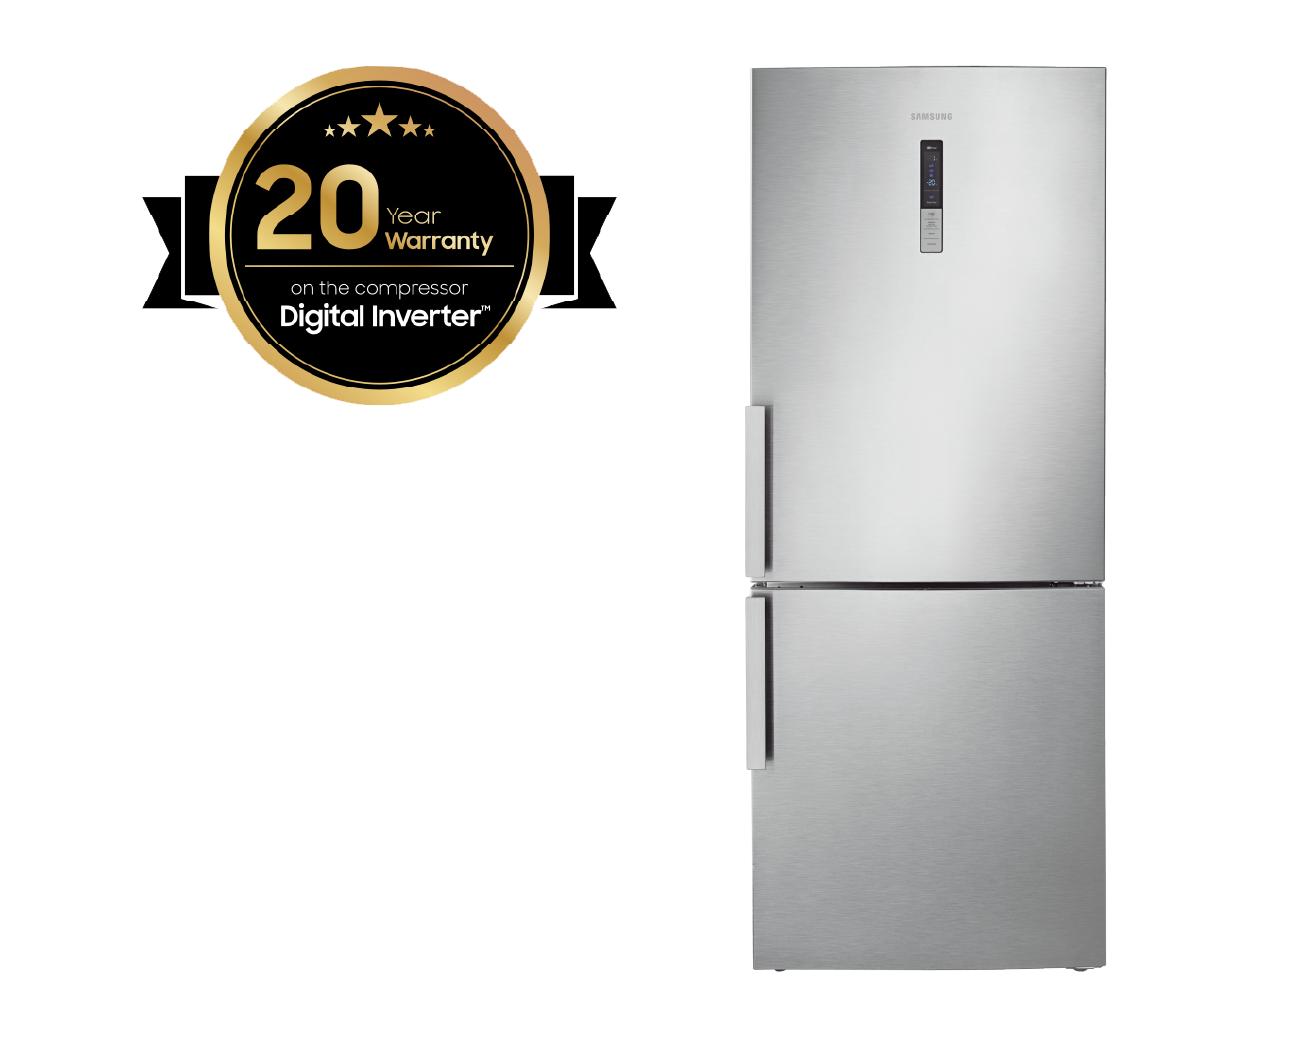 Bottom Freezer Refrigerator 435L - Silver